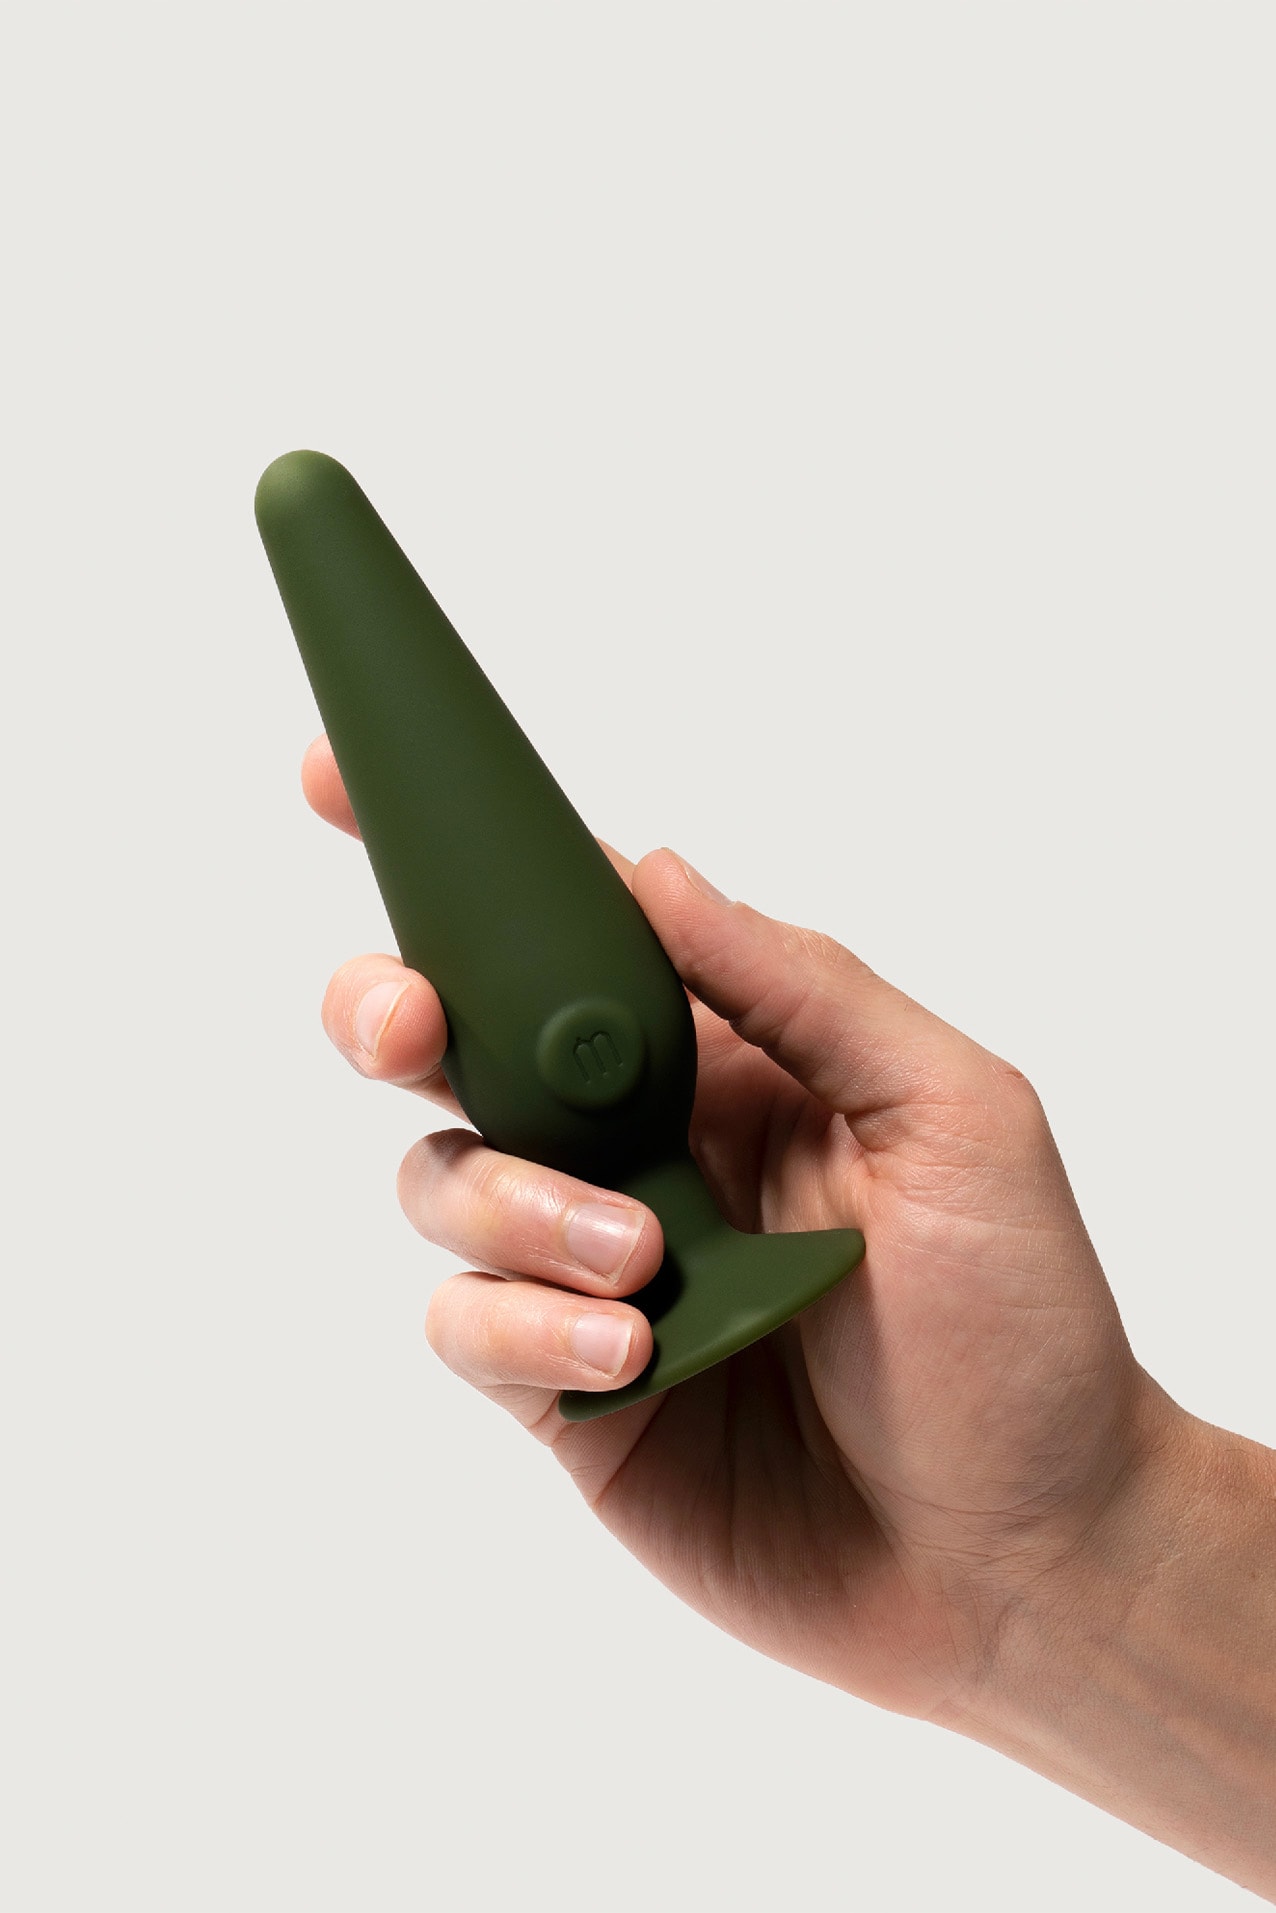 maude sexual wellness cone vibrating butt plug